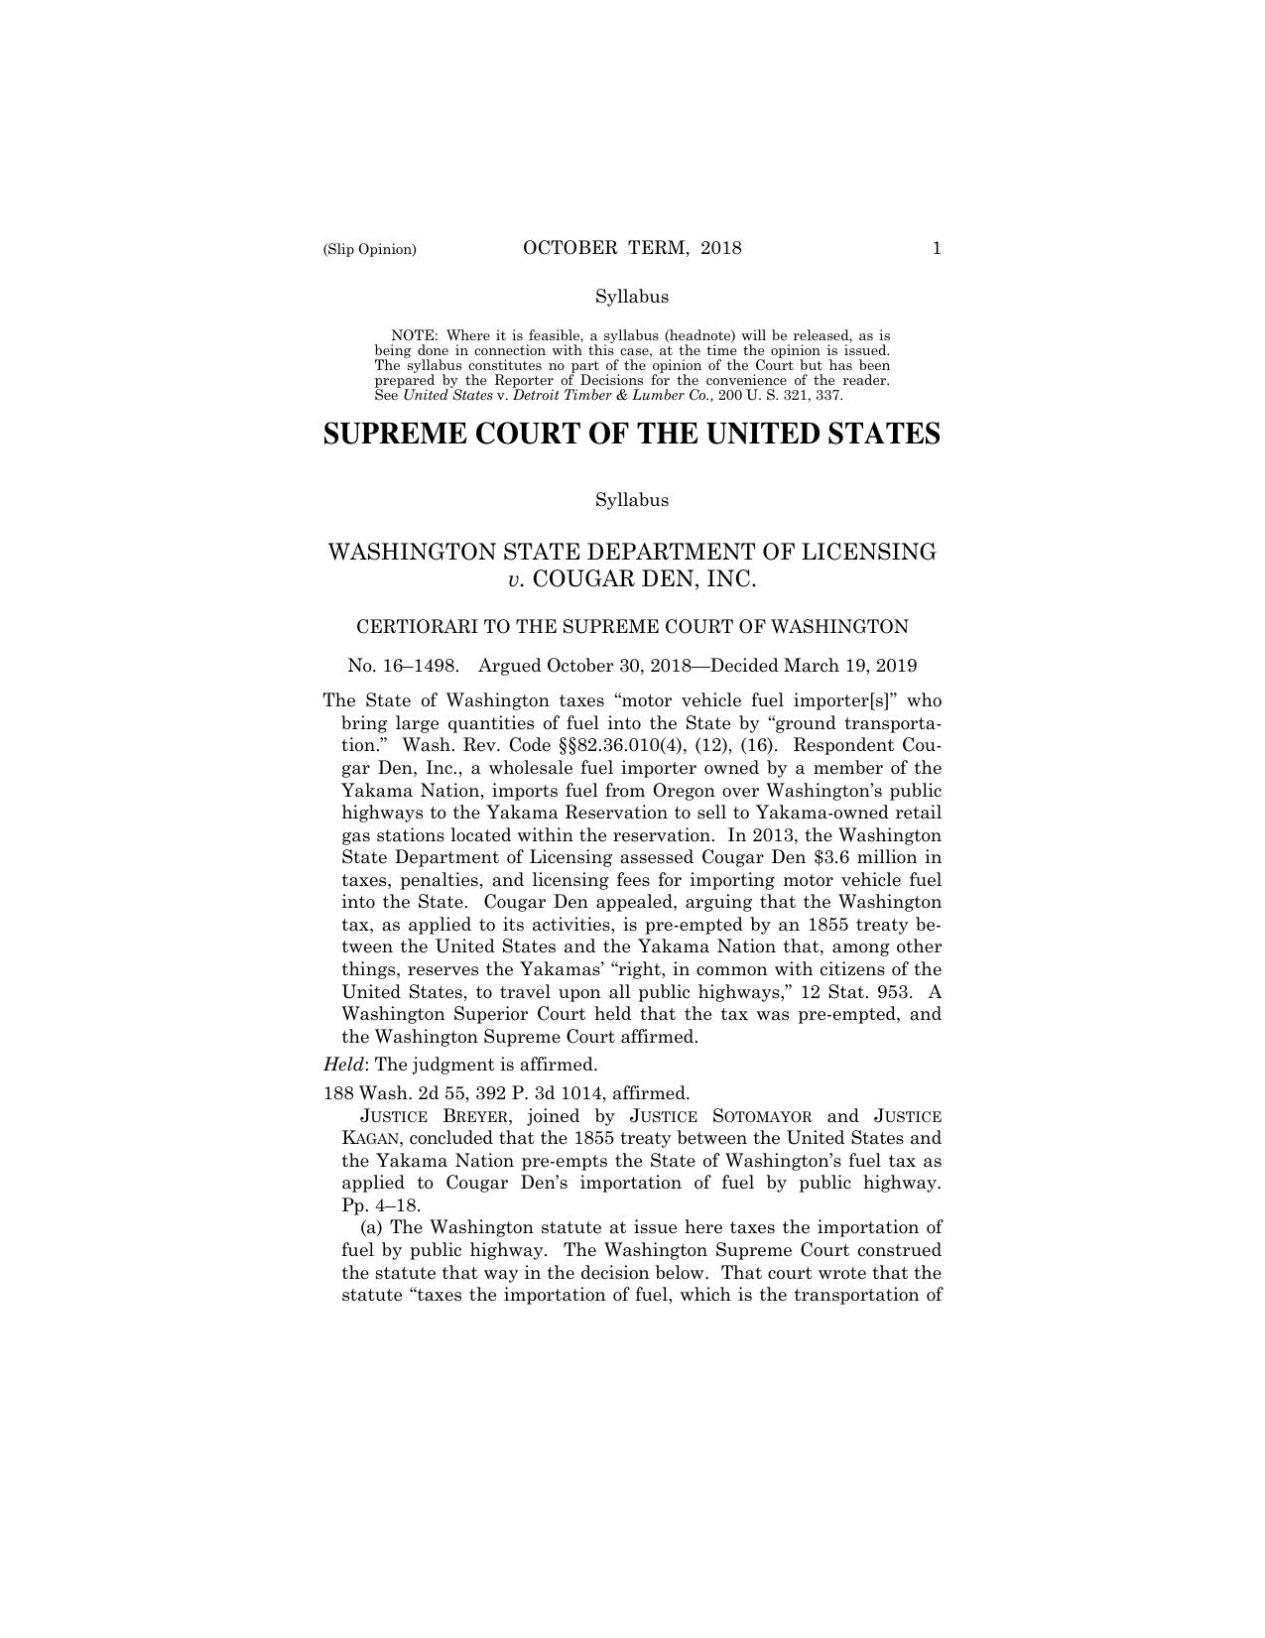 U.S. Supreme Court ruling on Yakama gas taxes